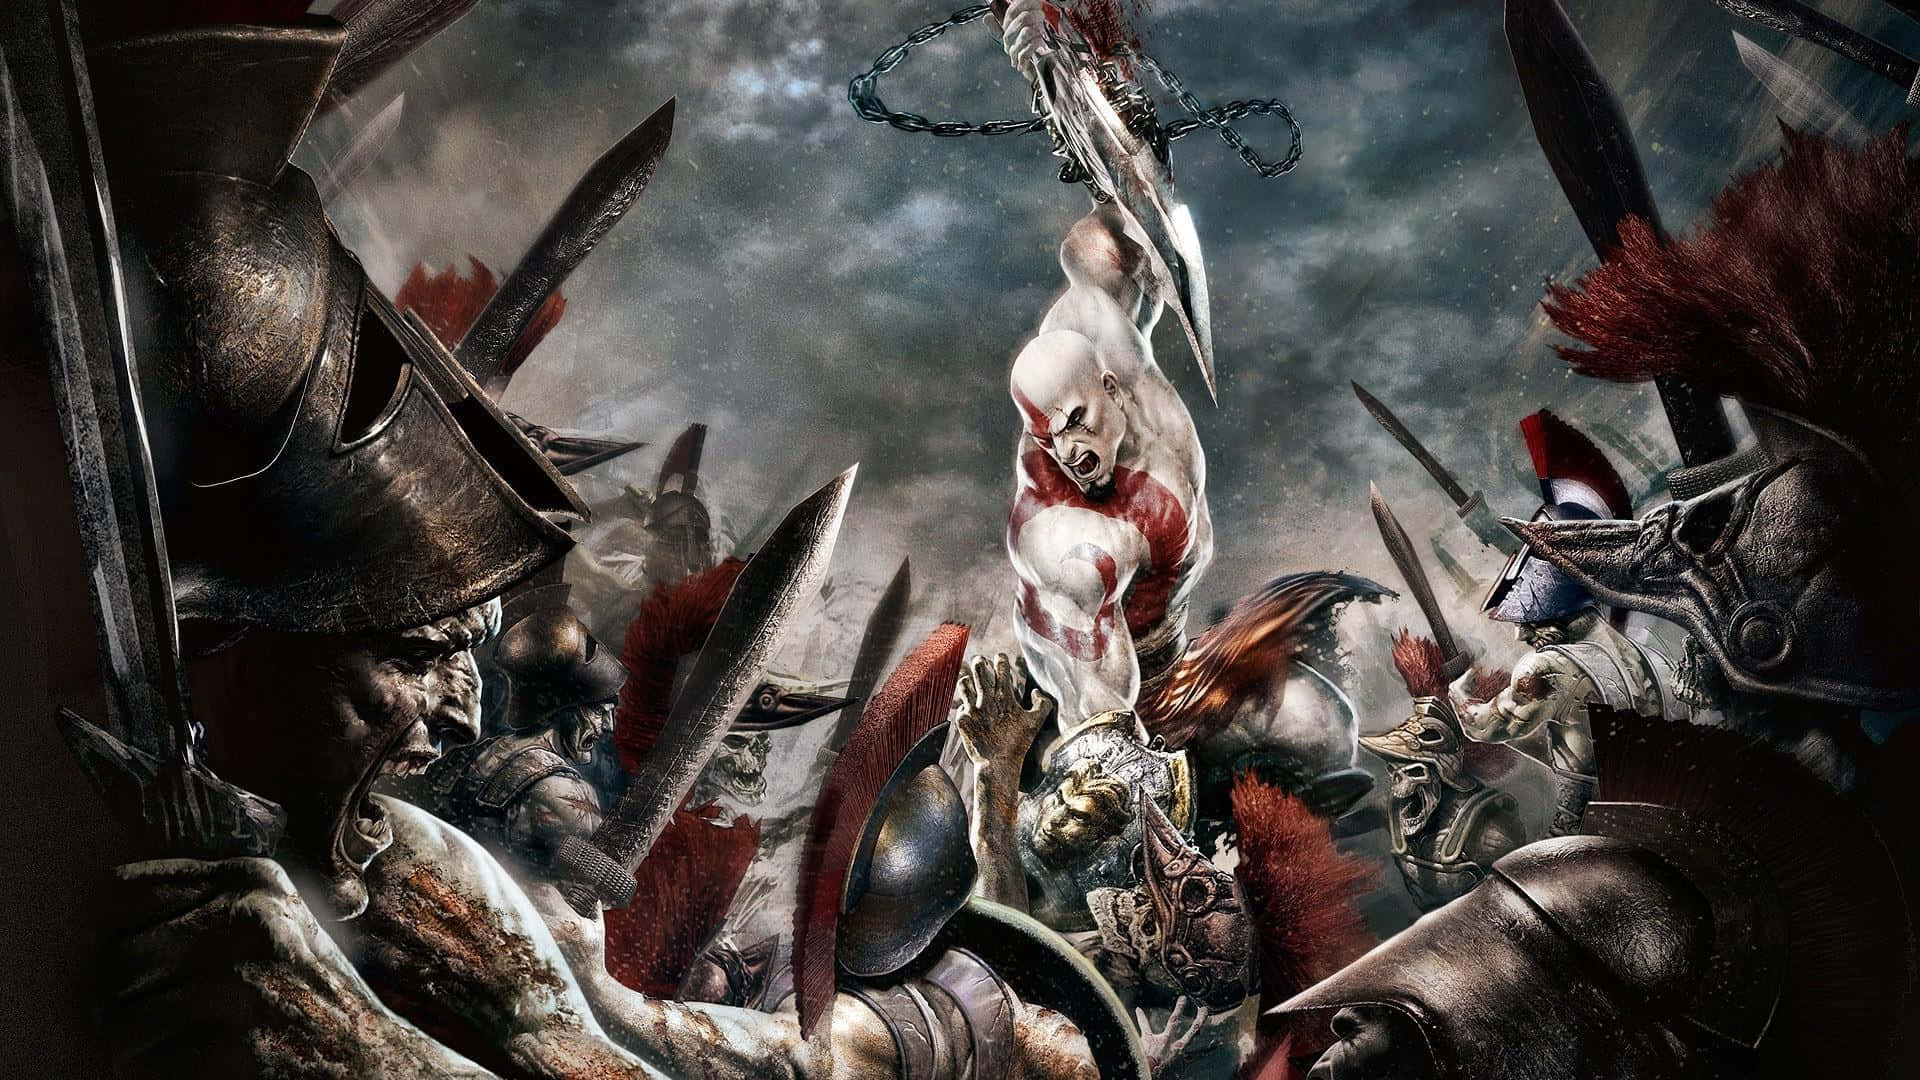 Kratose Atreus Si Imbarcano In Un'avventura Epica In God Of War.